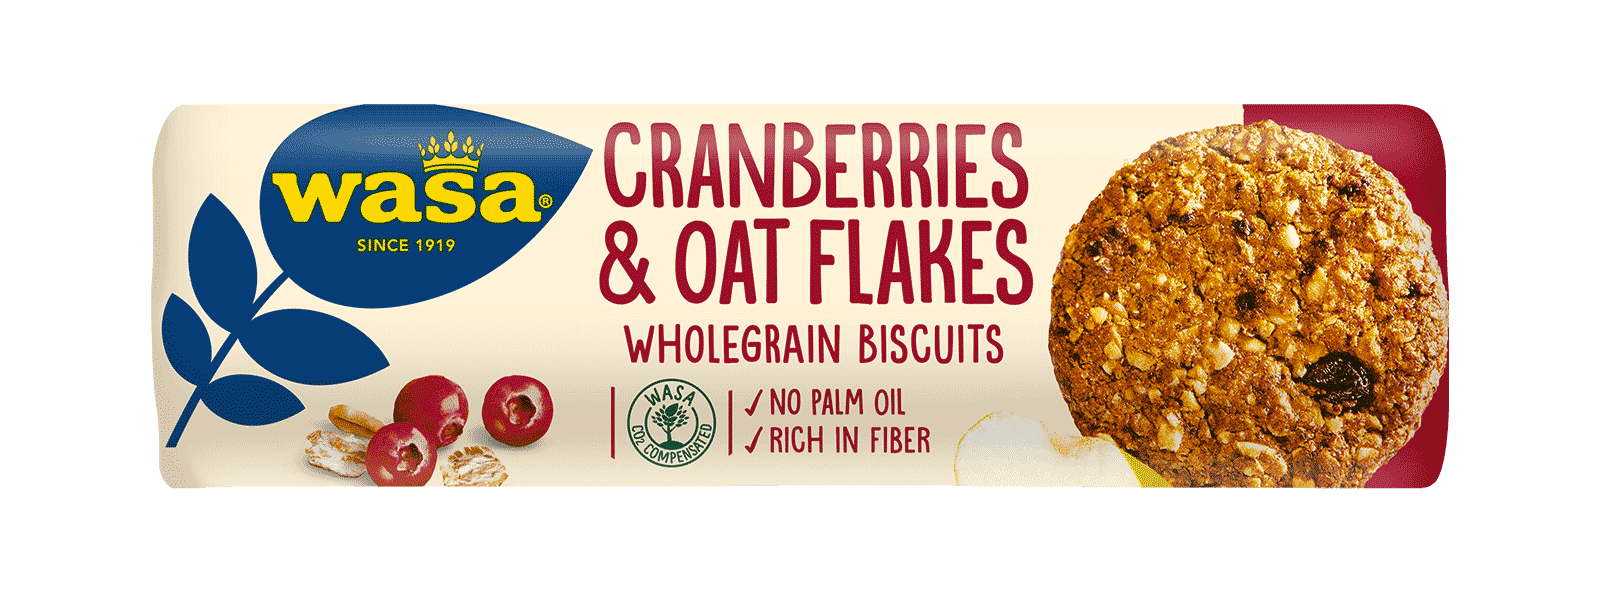 Cranberries & Oat Flakes